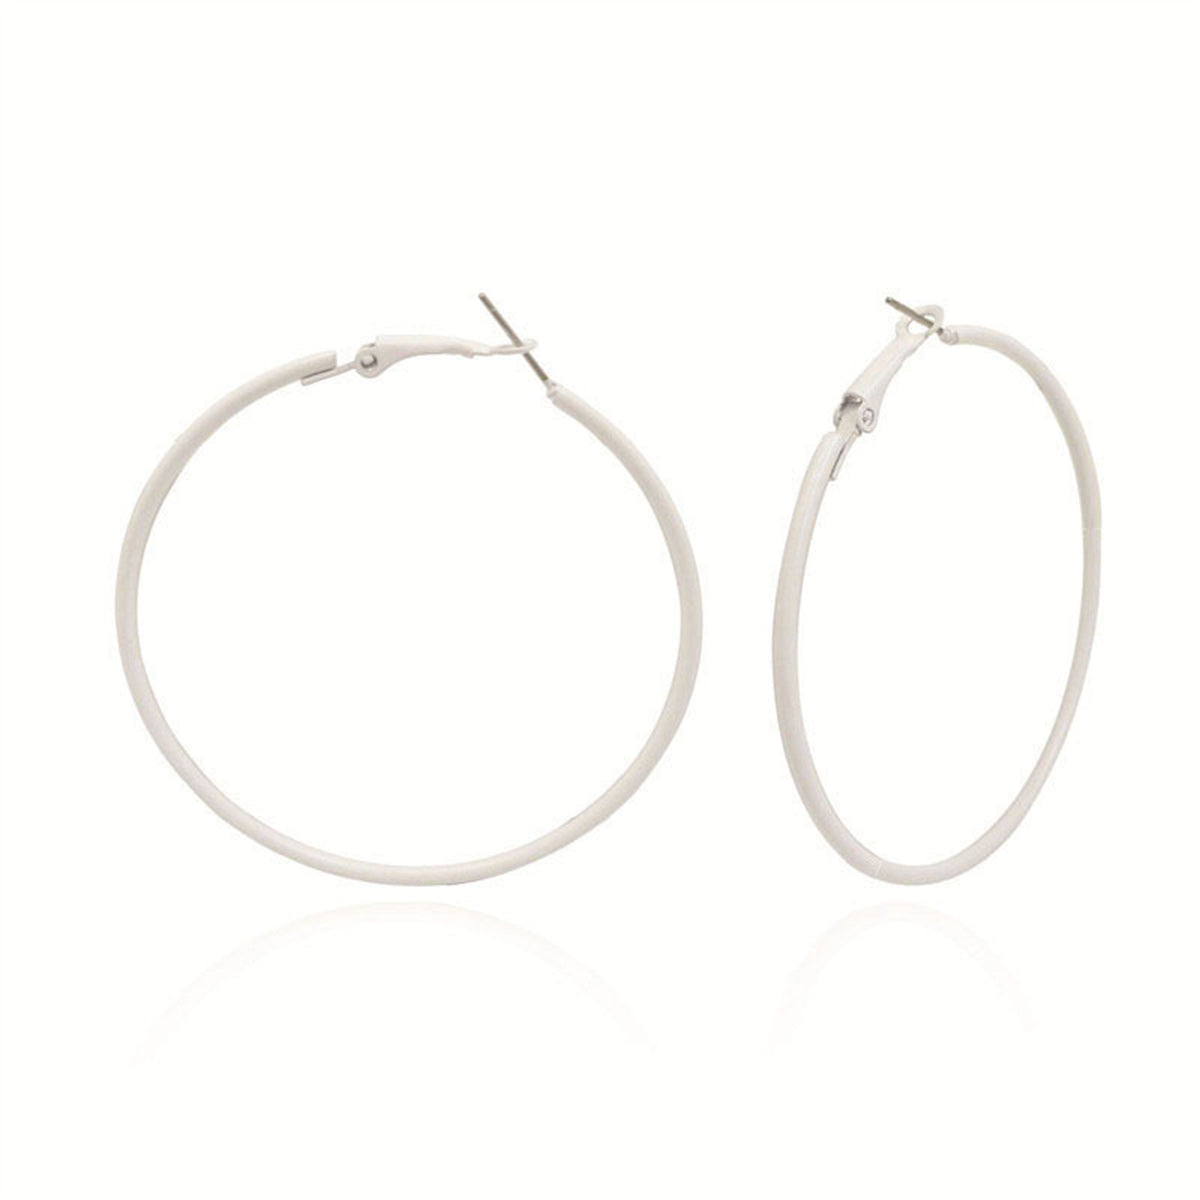 White Enamel & Silver-Plated Hoop Earrings